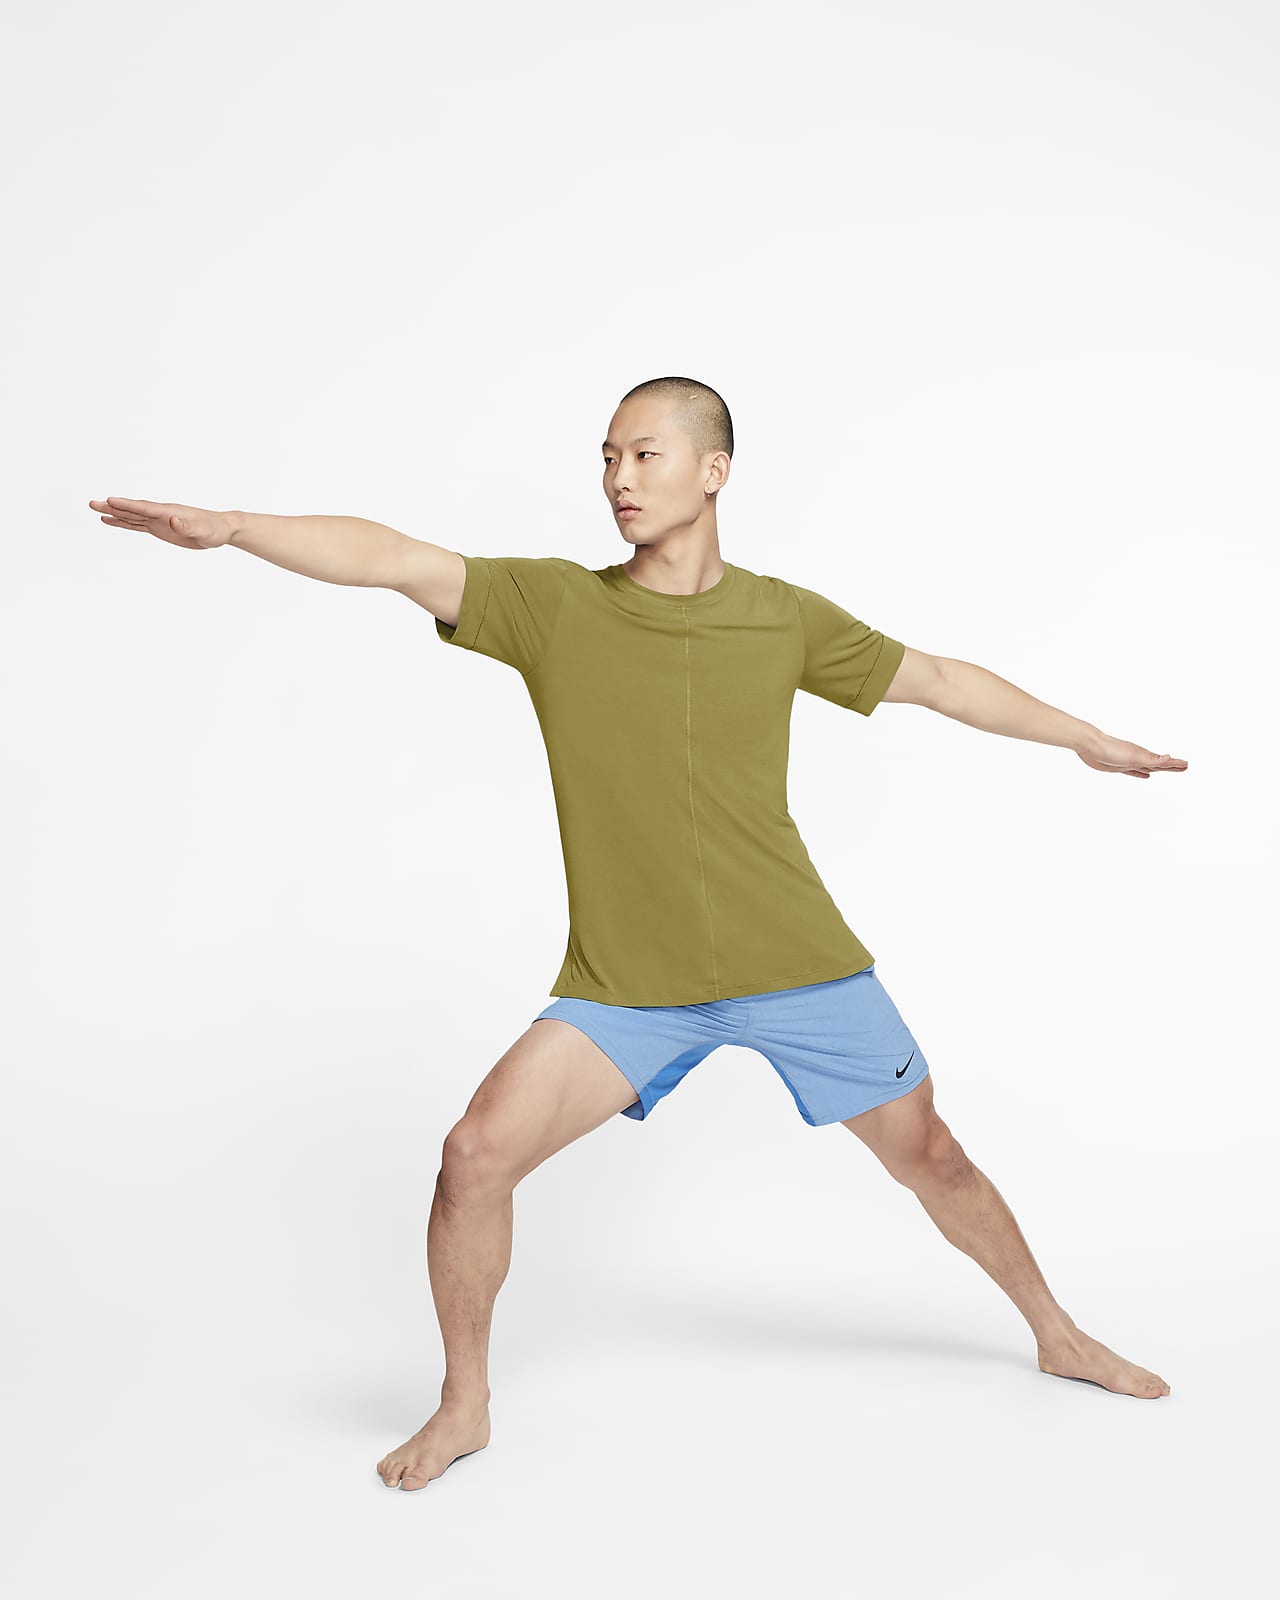 Nike Yoga Tank - Yoga And Pilater Clothing